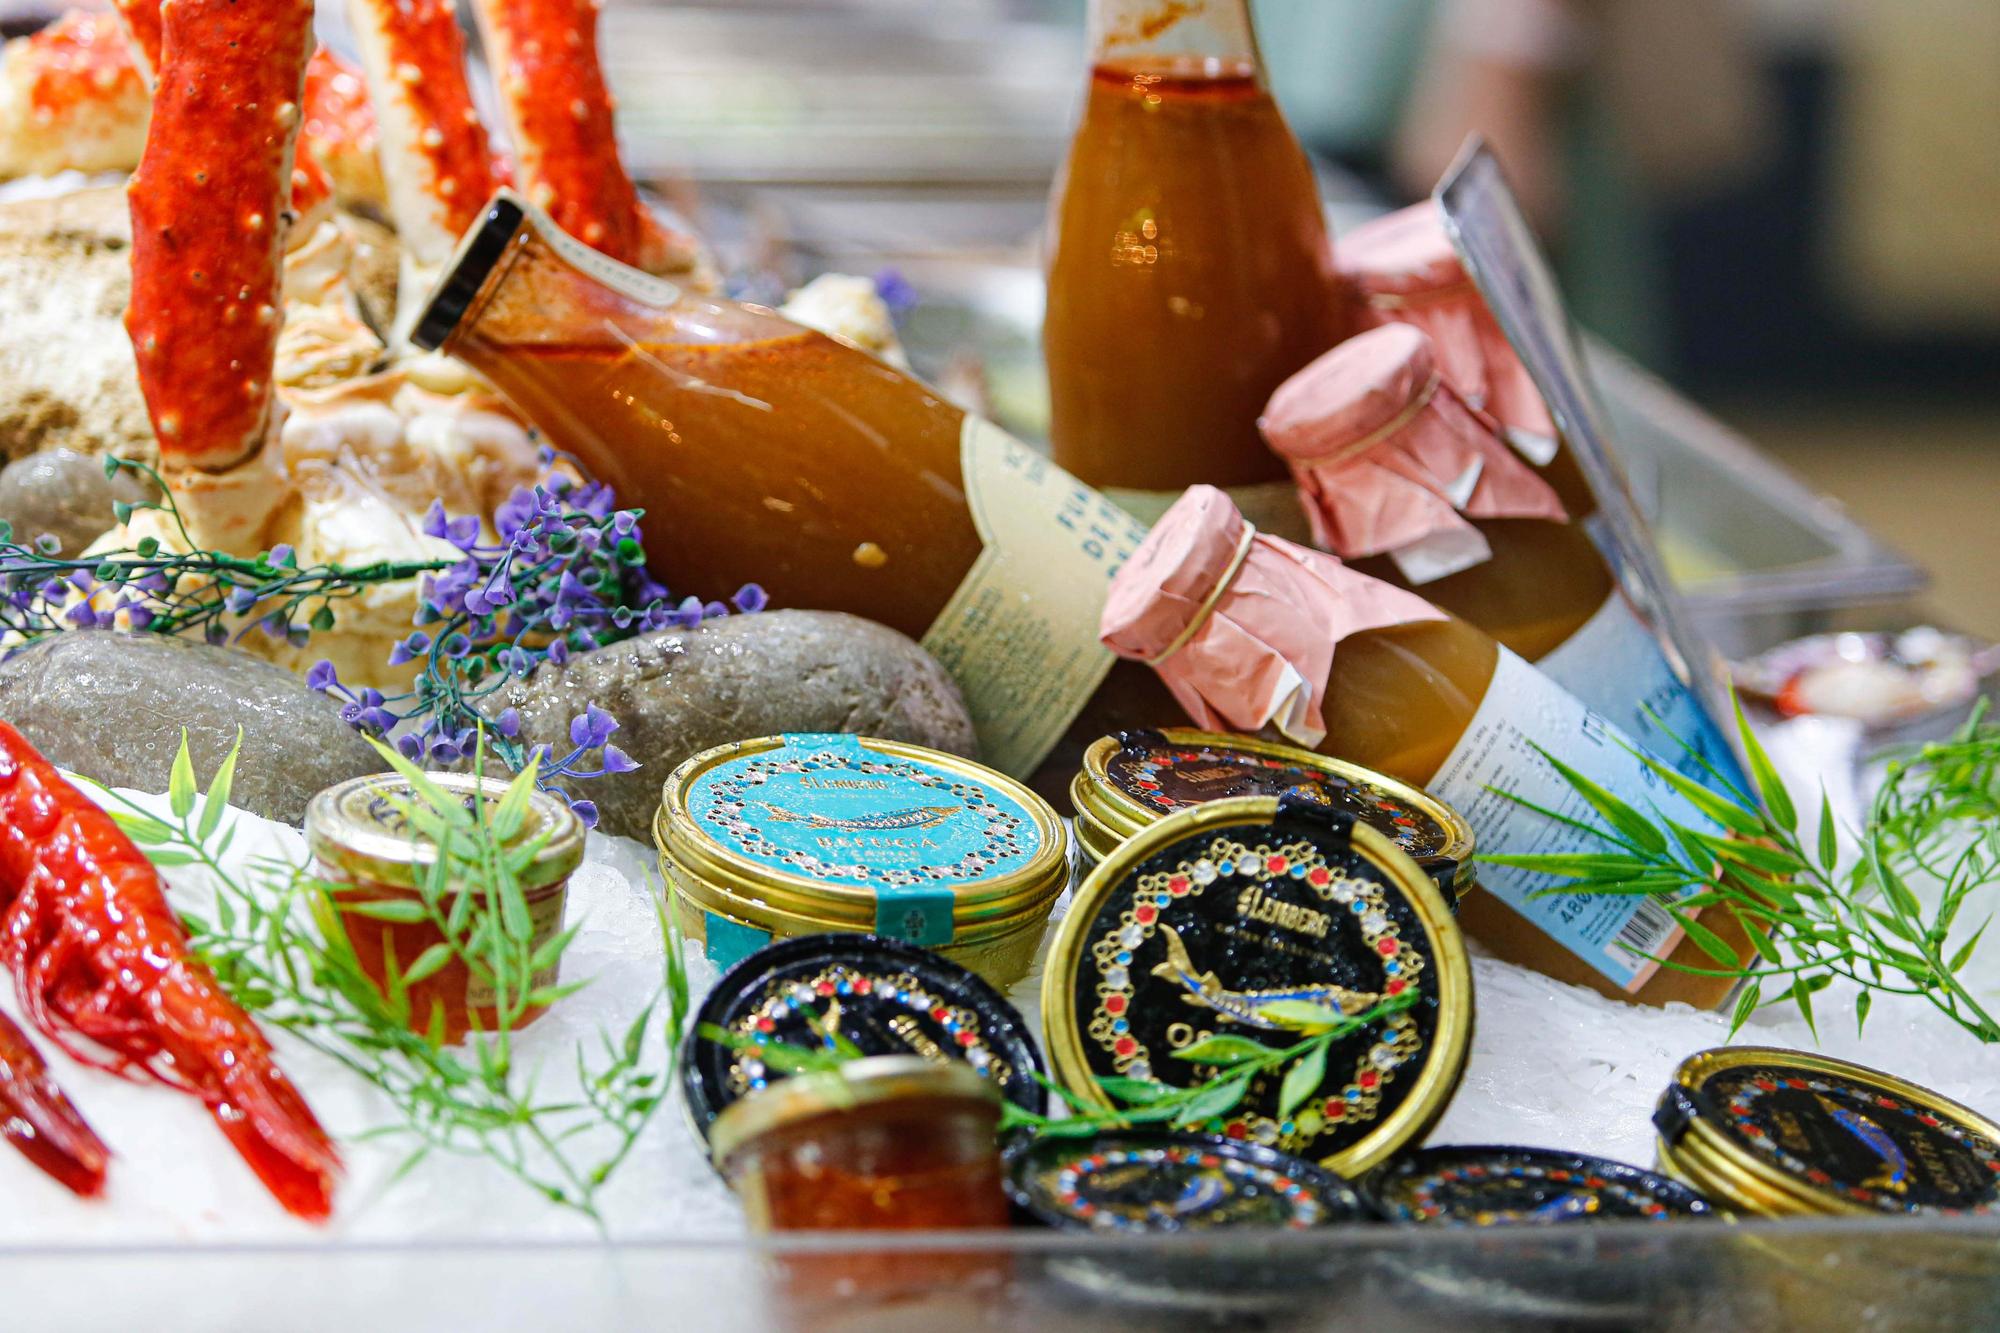 Mercat Nou: días de langosta y caviar